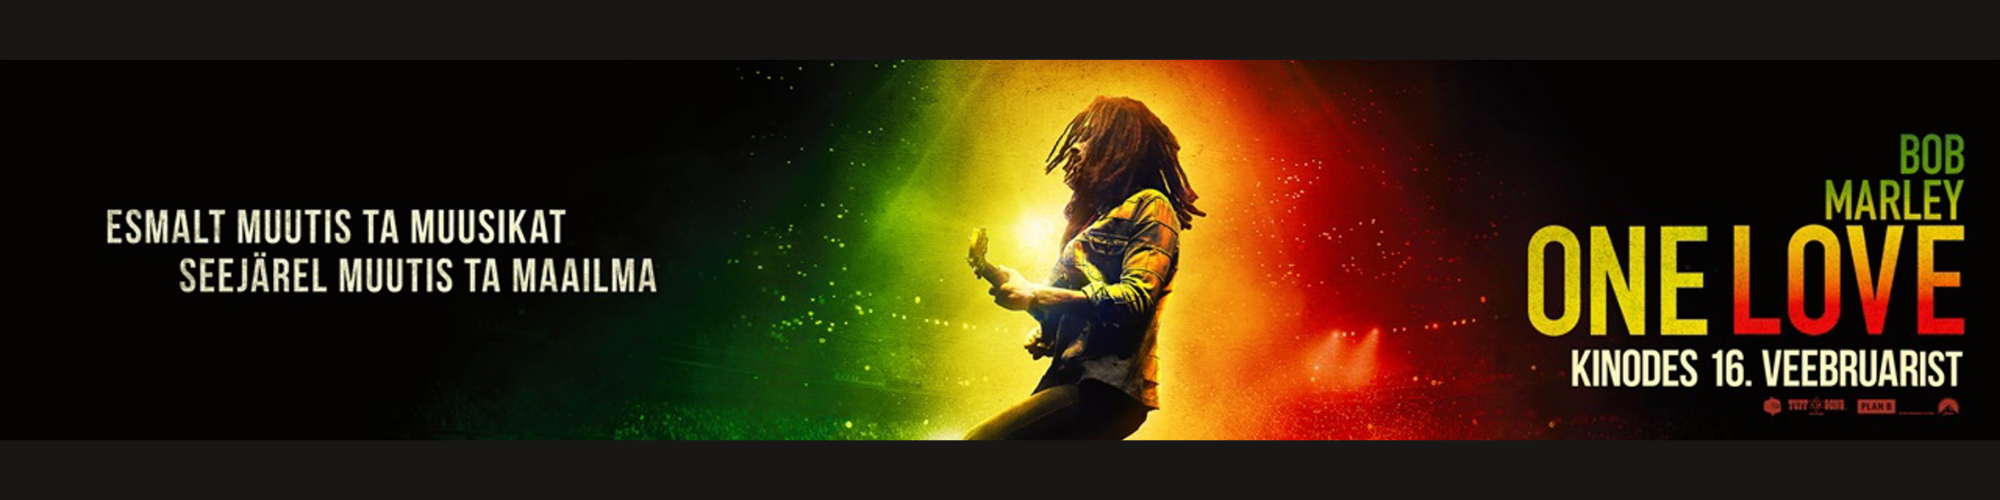 Bob Marley: One Love-1